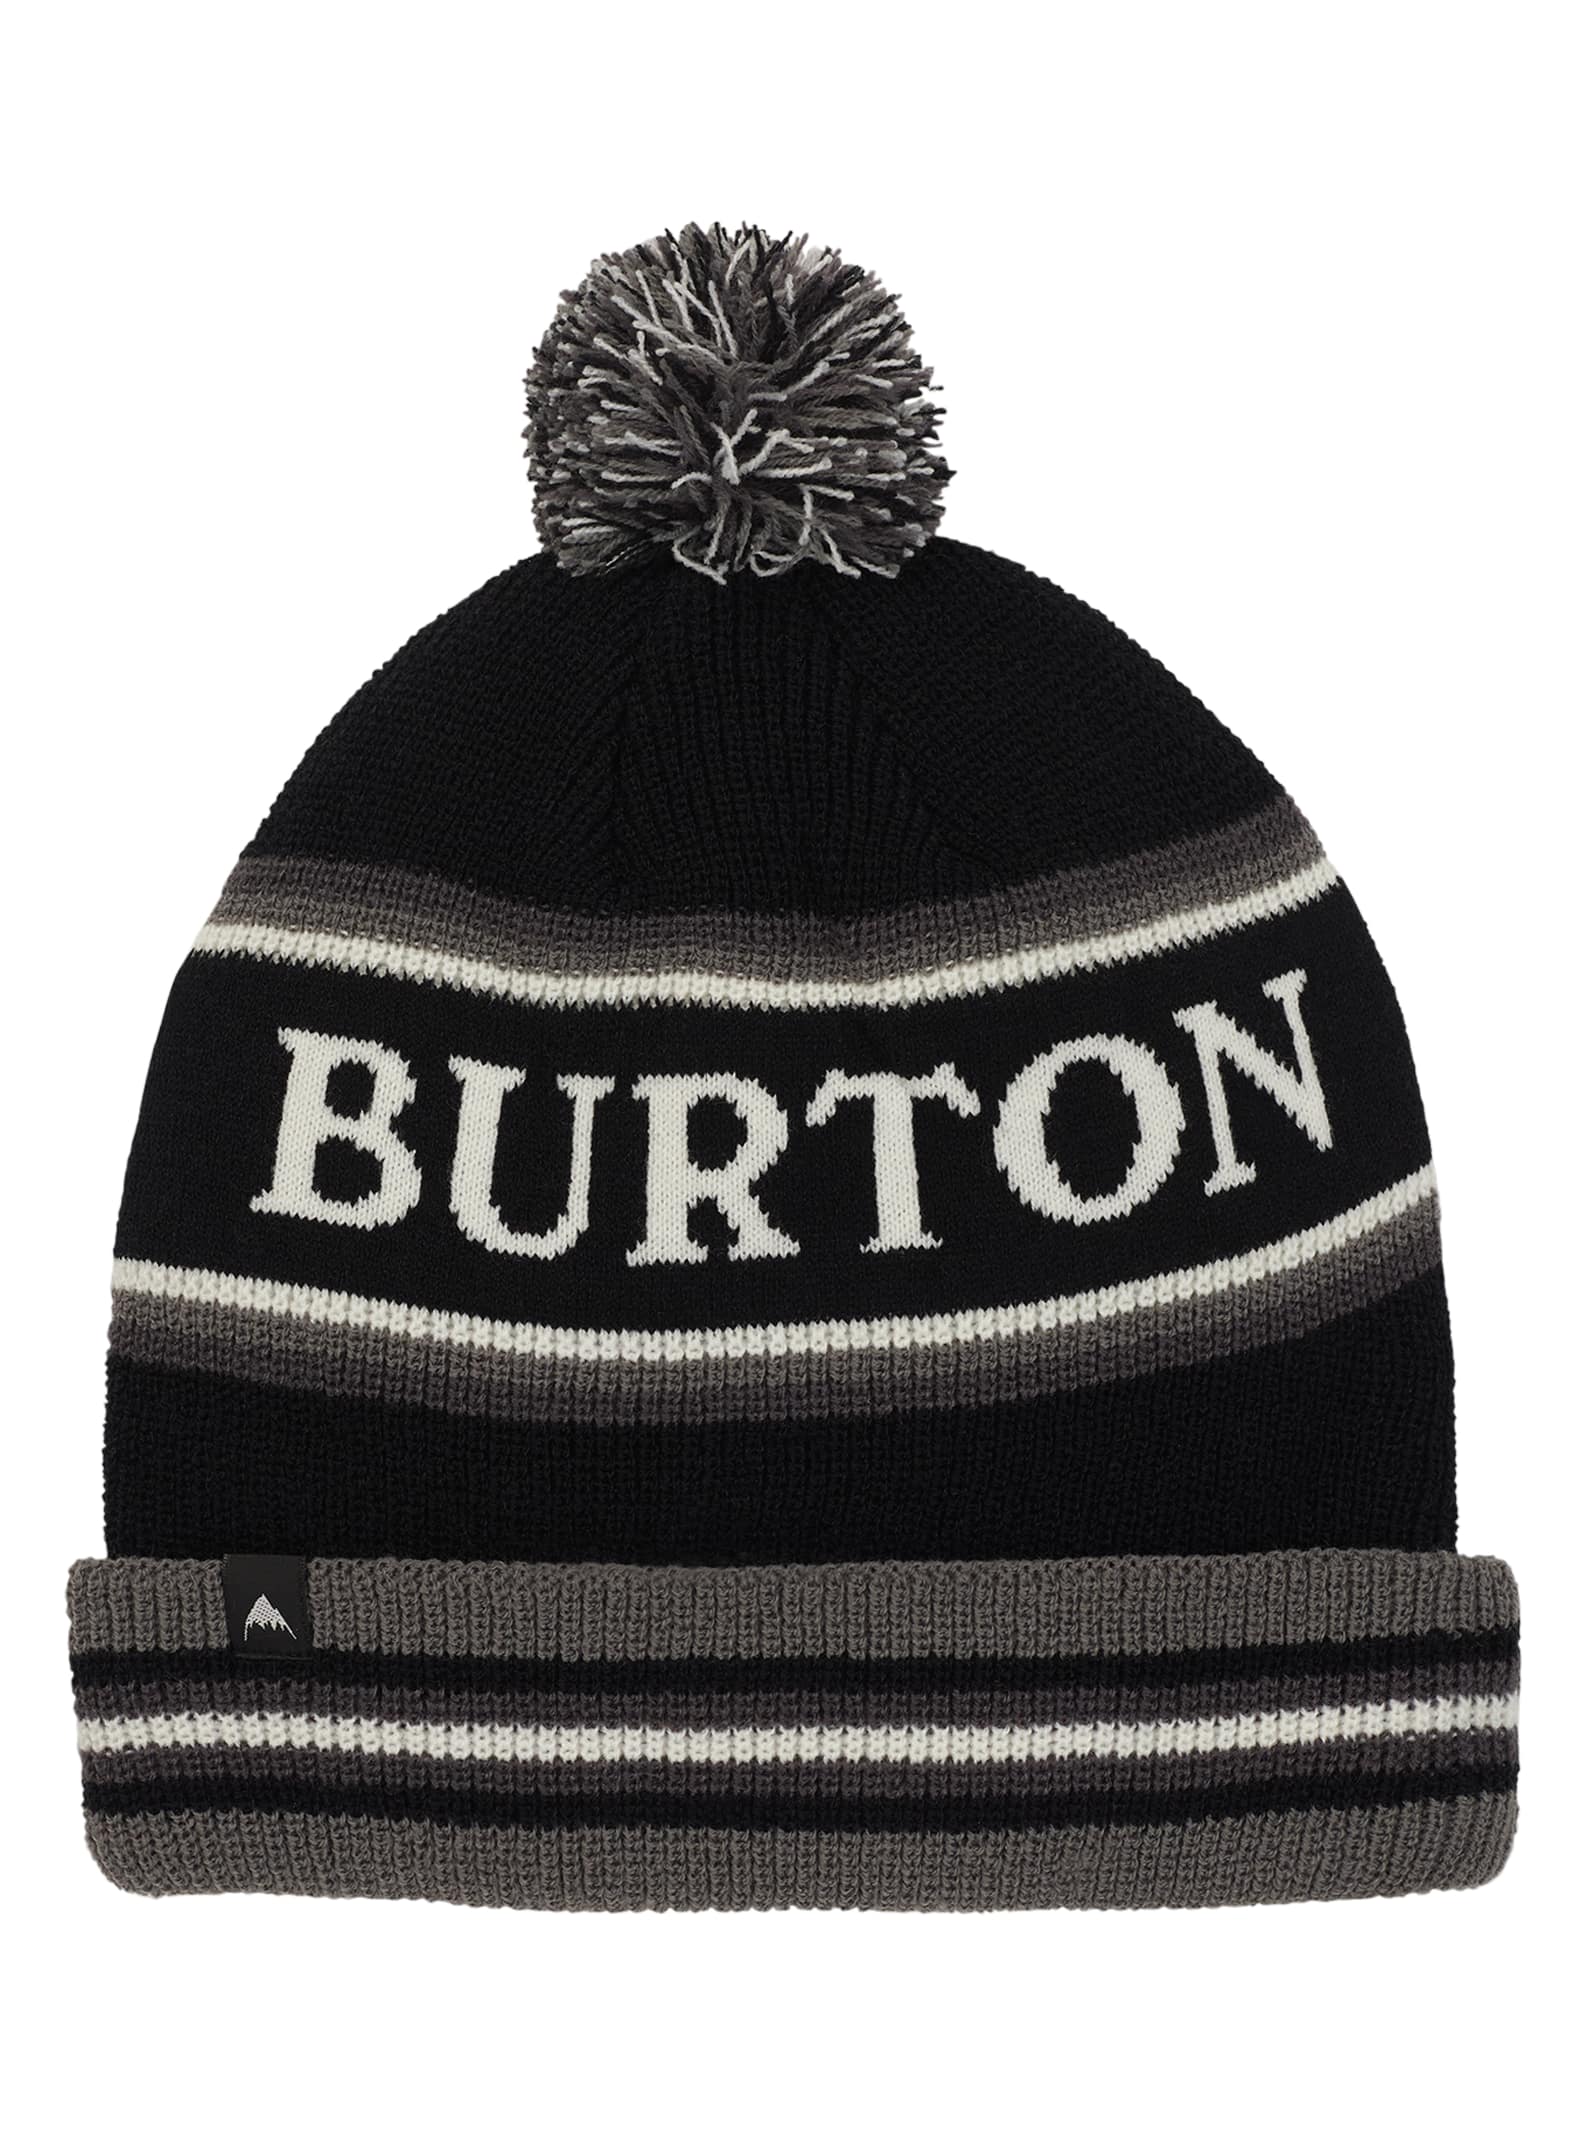 Women's Hats & Beanies | Burton Snowboards US